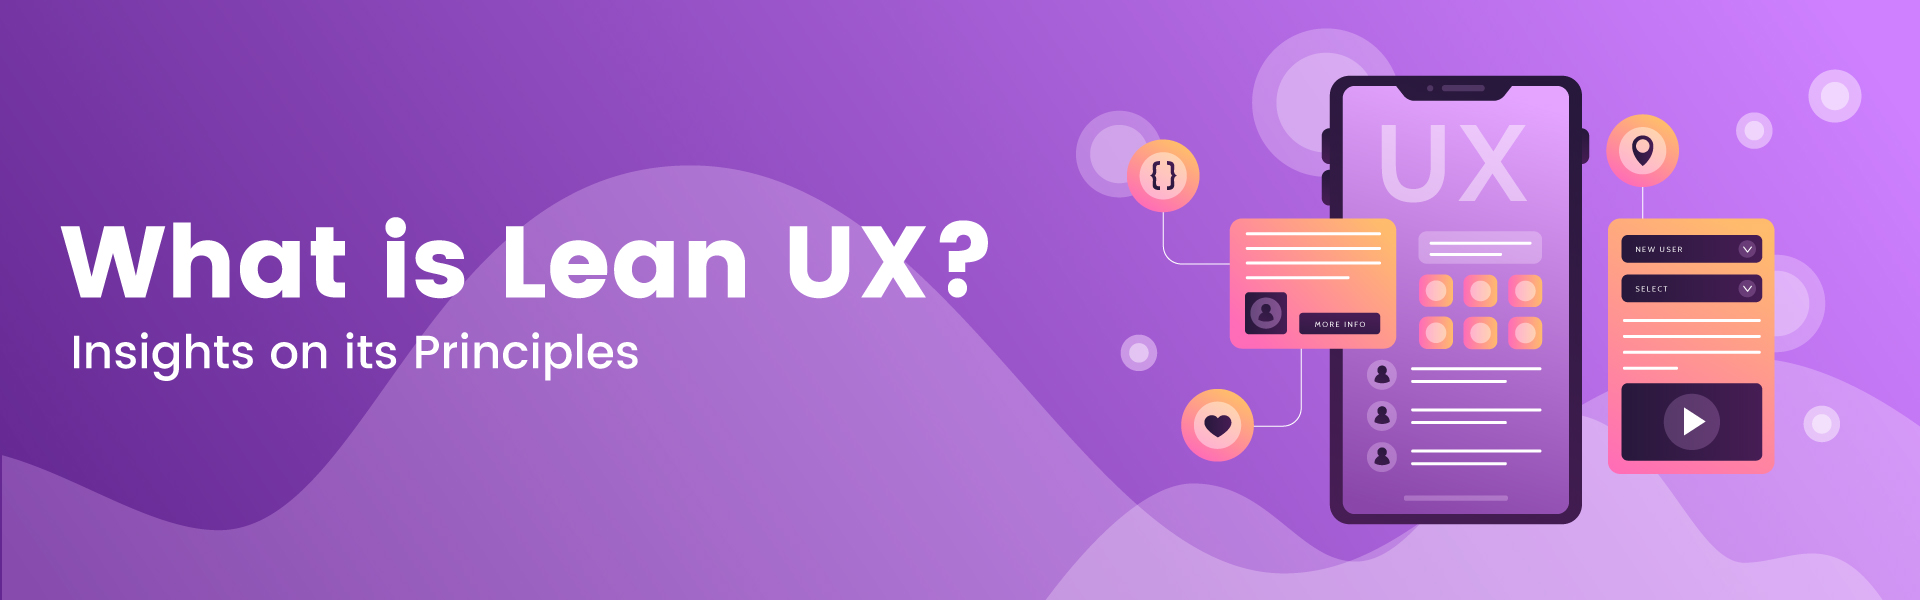 What is Lean UX